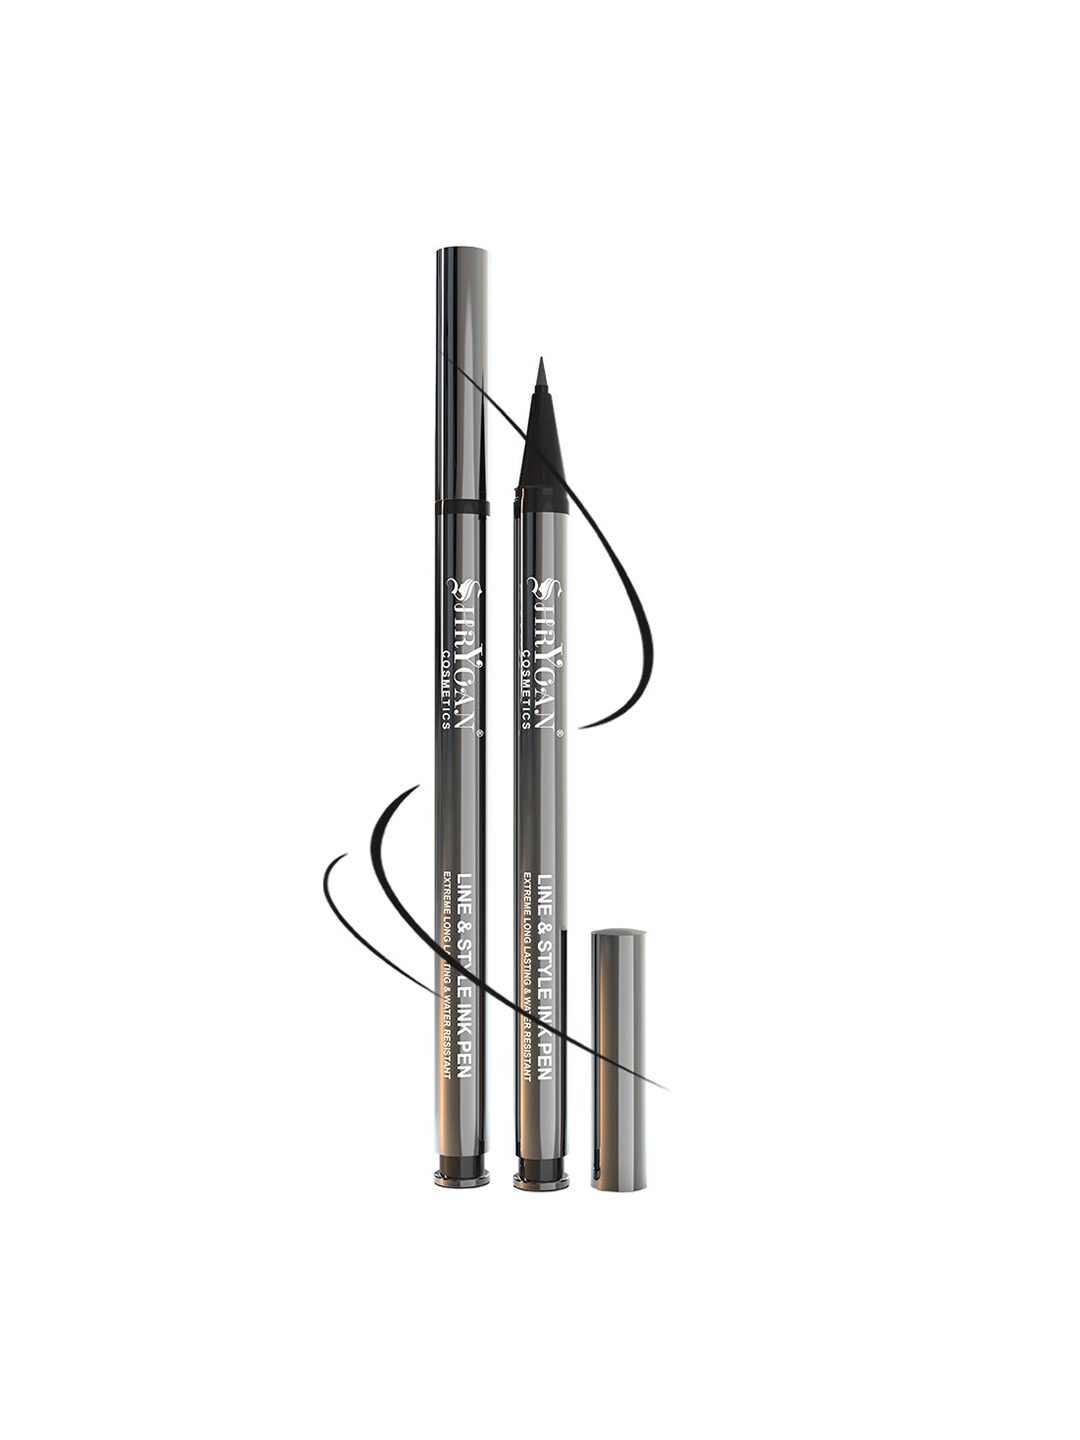 SHRYOAN Black Line & Style Ink Eyeliner Pen Price in India